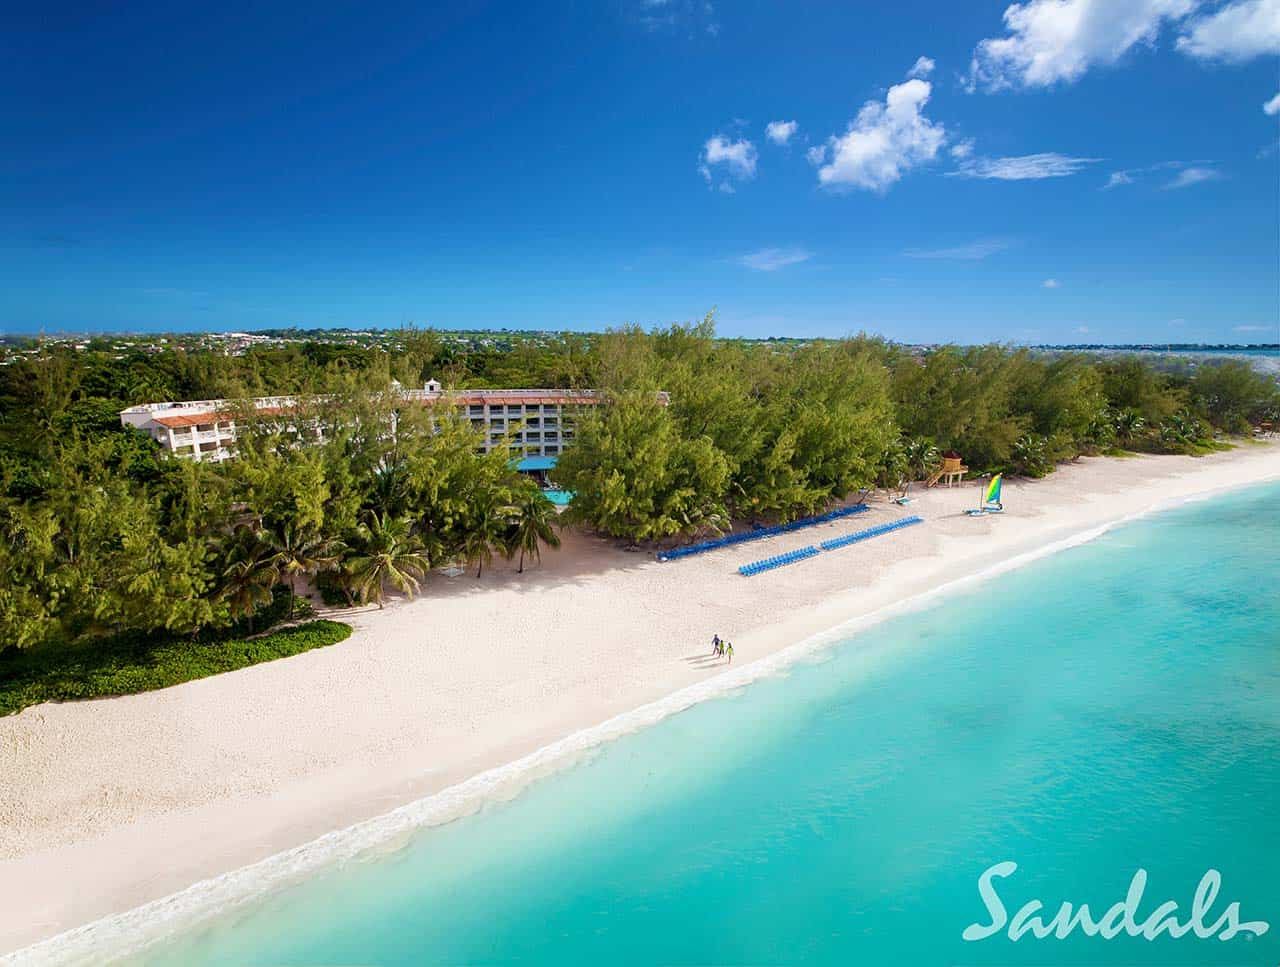 Sandals Barbados resort all inclusive beach